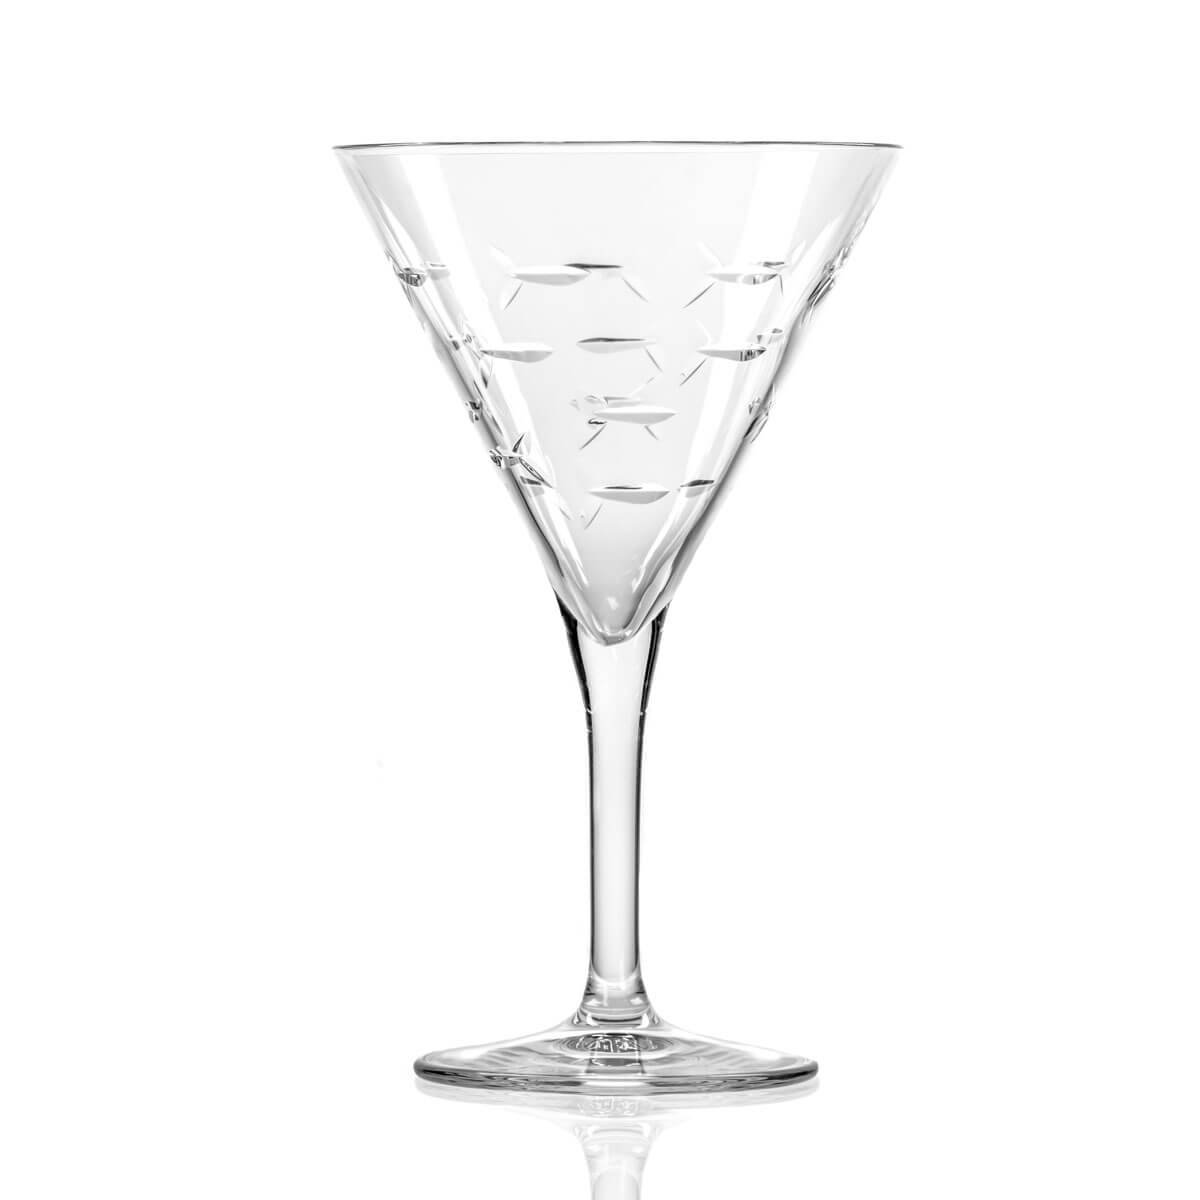 9031 - School of Fish Martini Glass (6) - $18/each